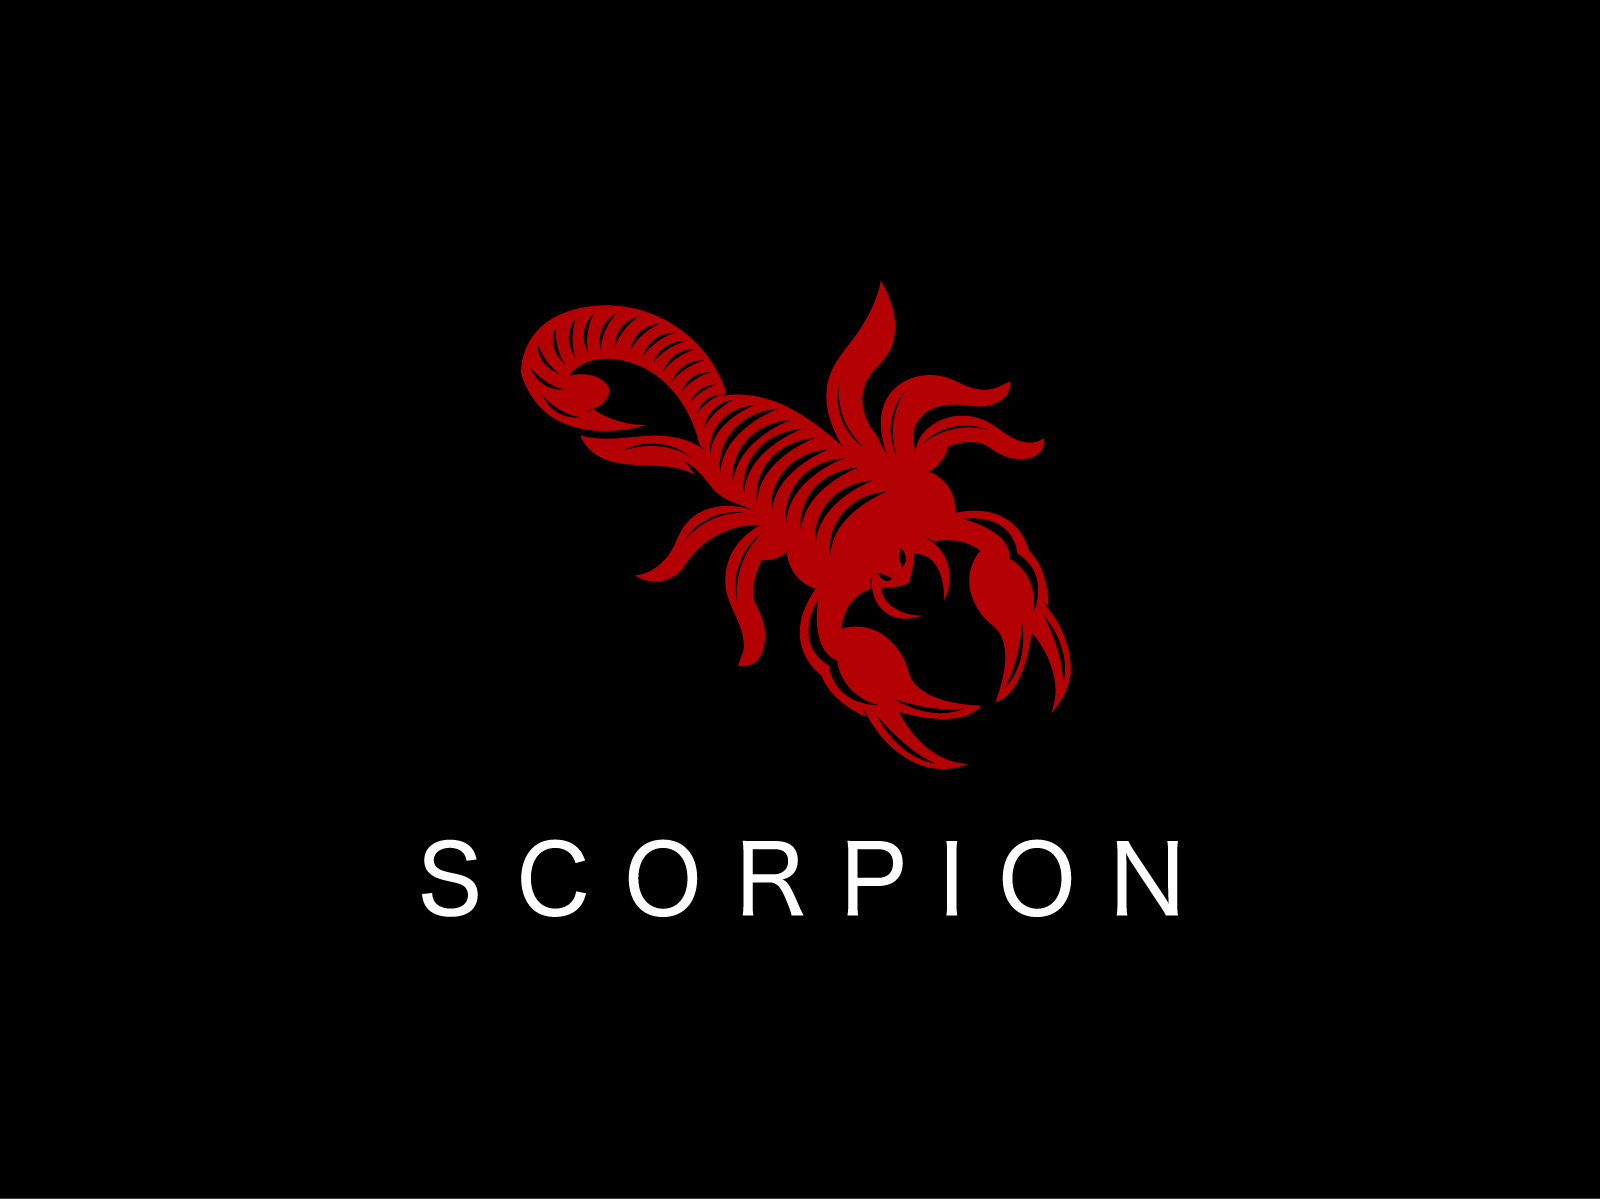 Scorpion Logo For Sale by Usman on Dribbble